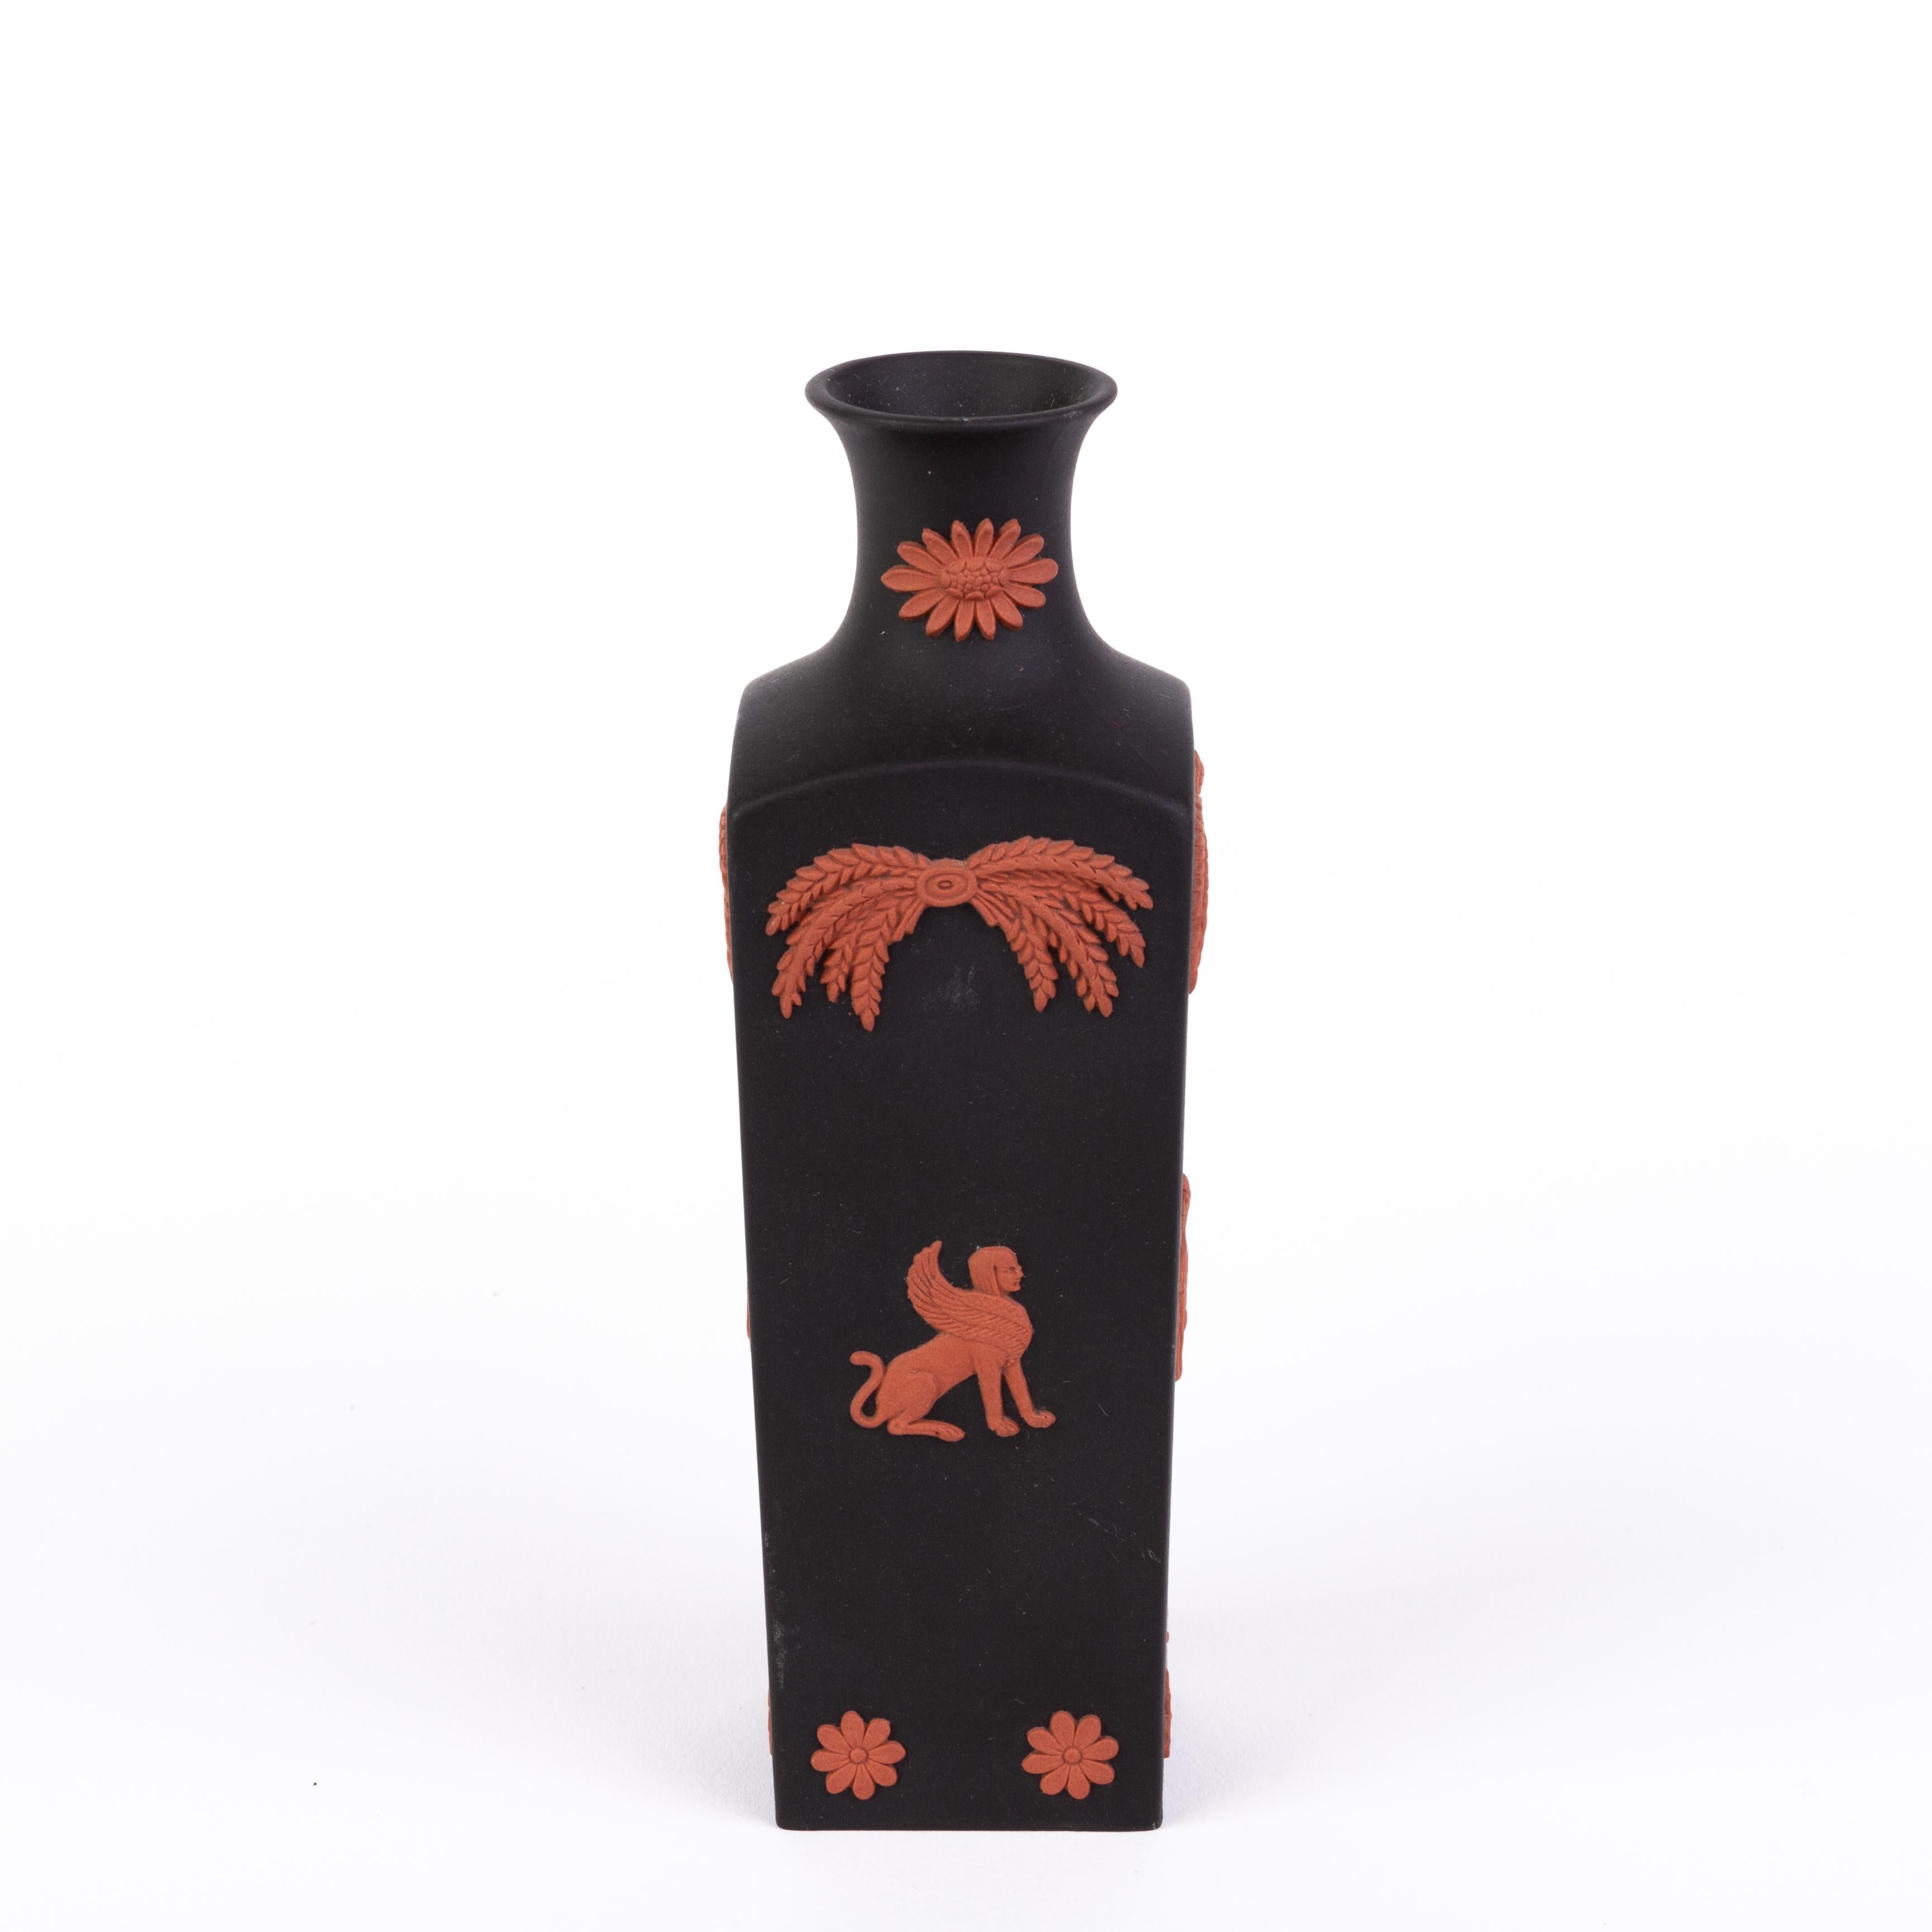 Wedgwood Egyptian Revival Black Jasperware & Terracotta Cameo Sphinx Vase
Good condition
Free international shipping.